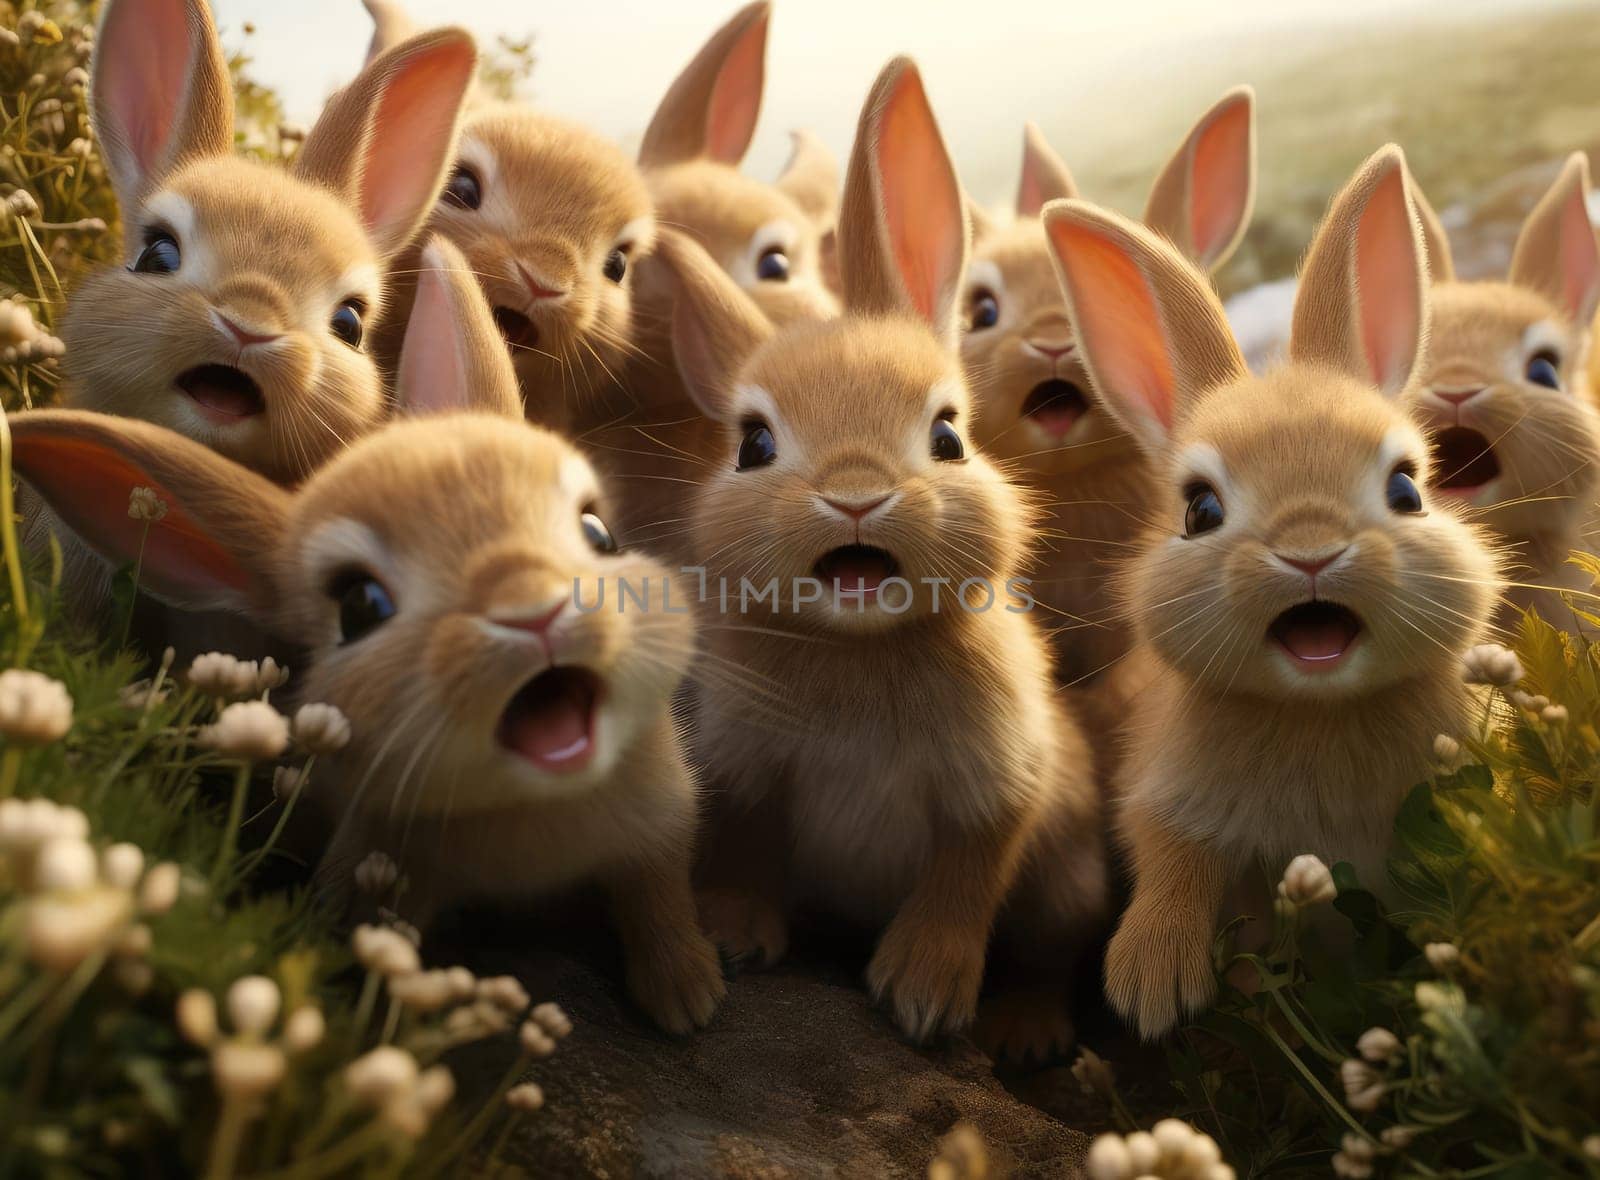 Several rabbits take a group selfie by cherezoff